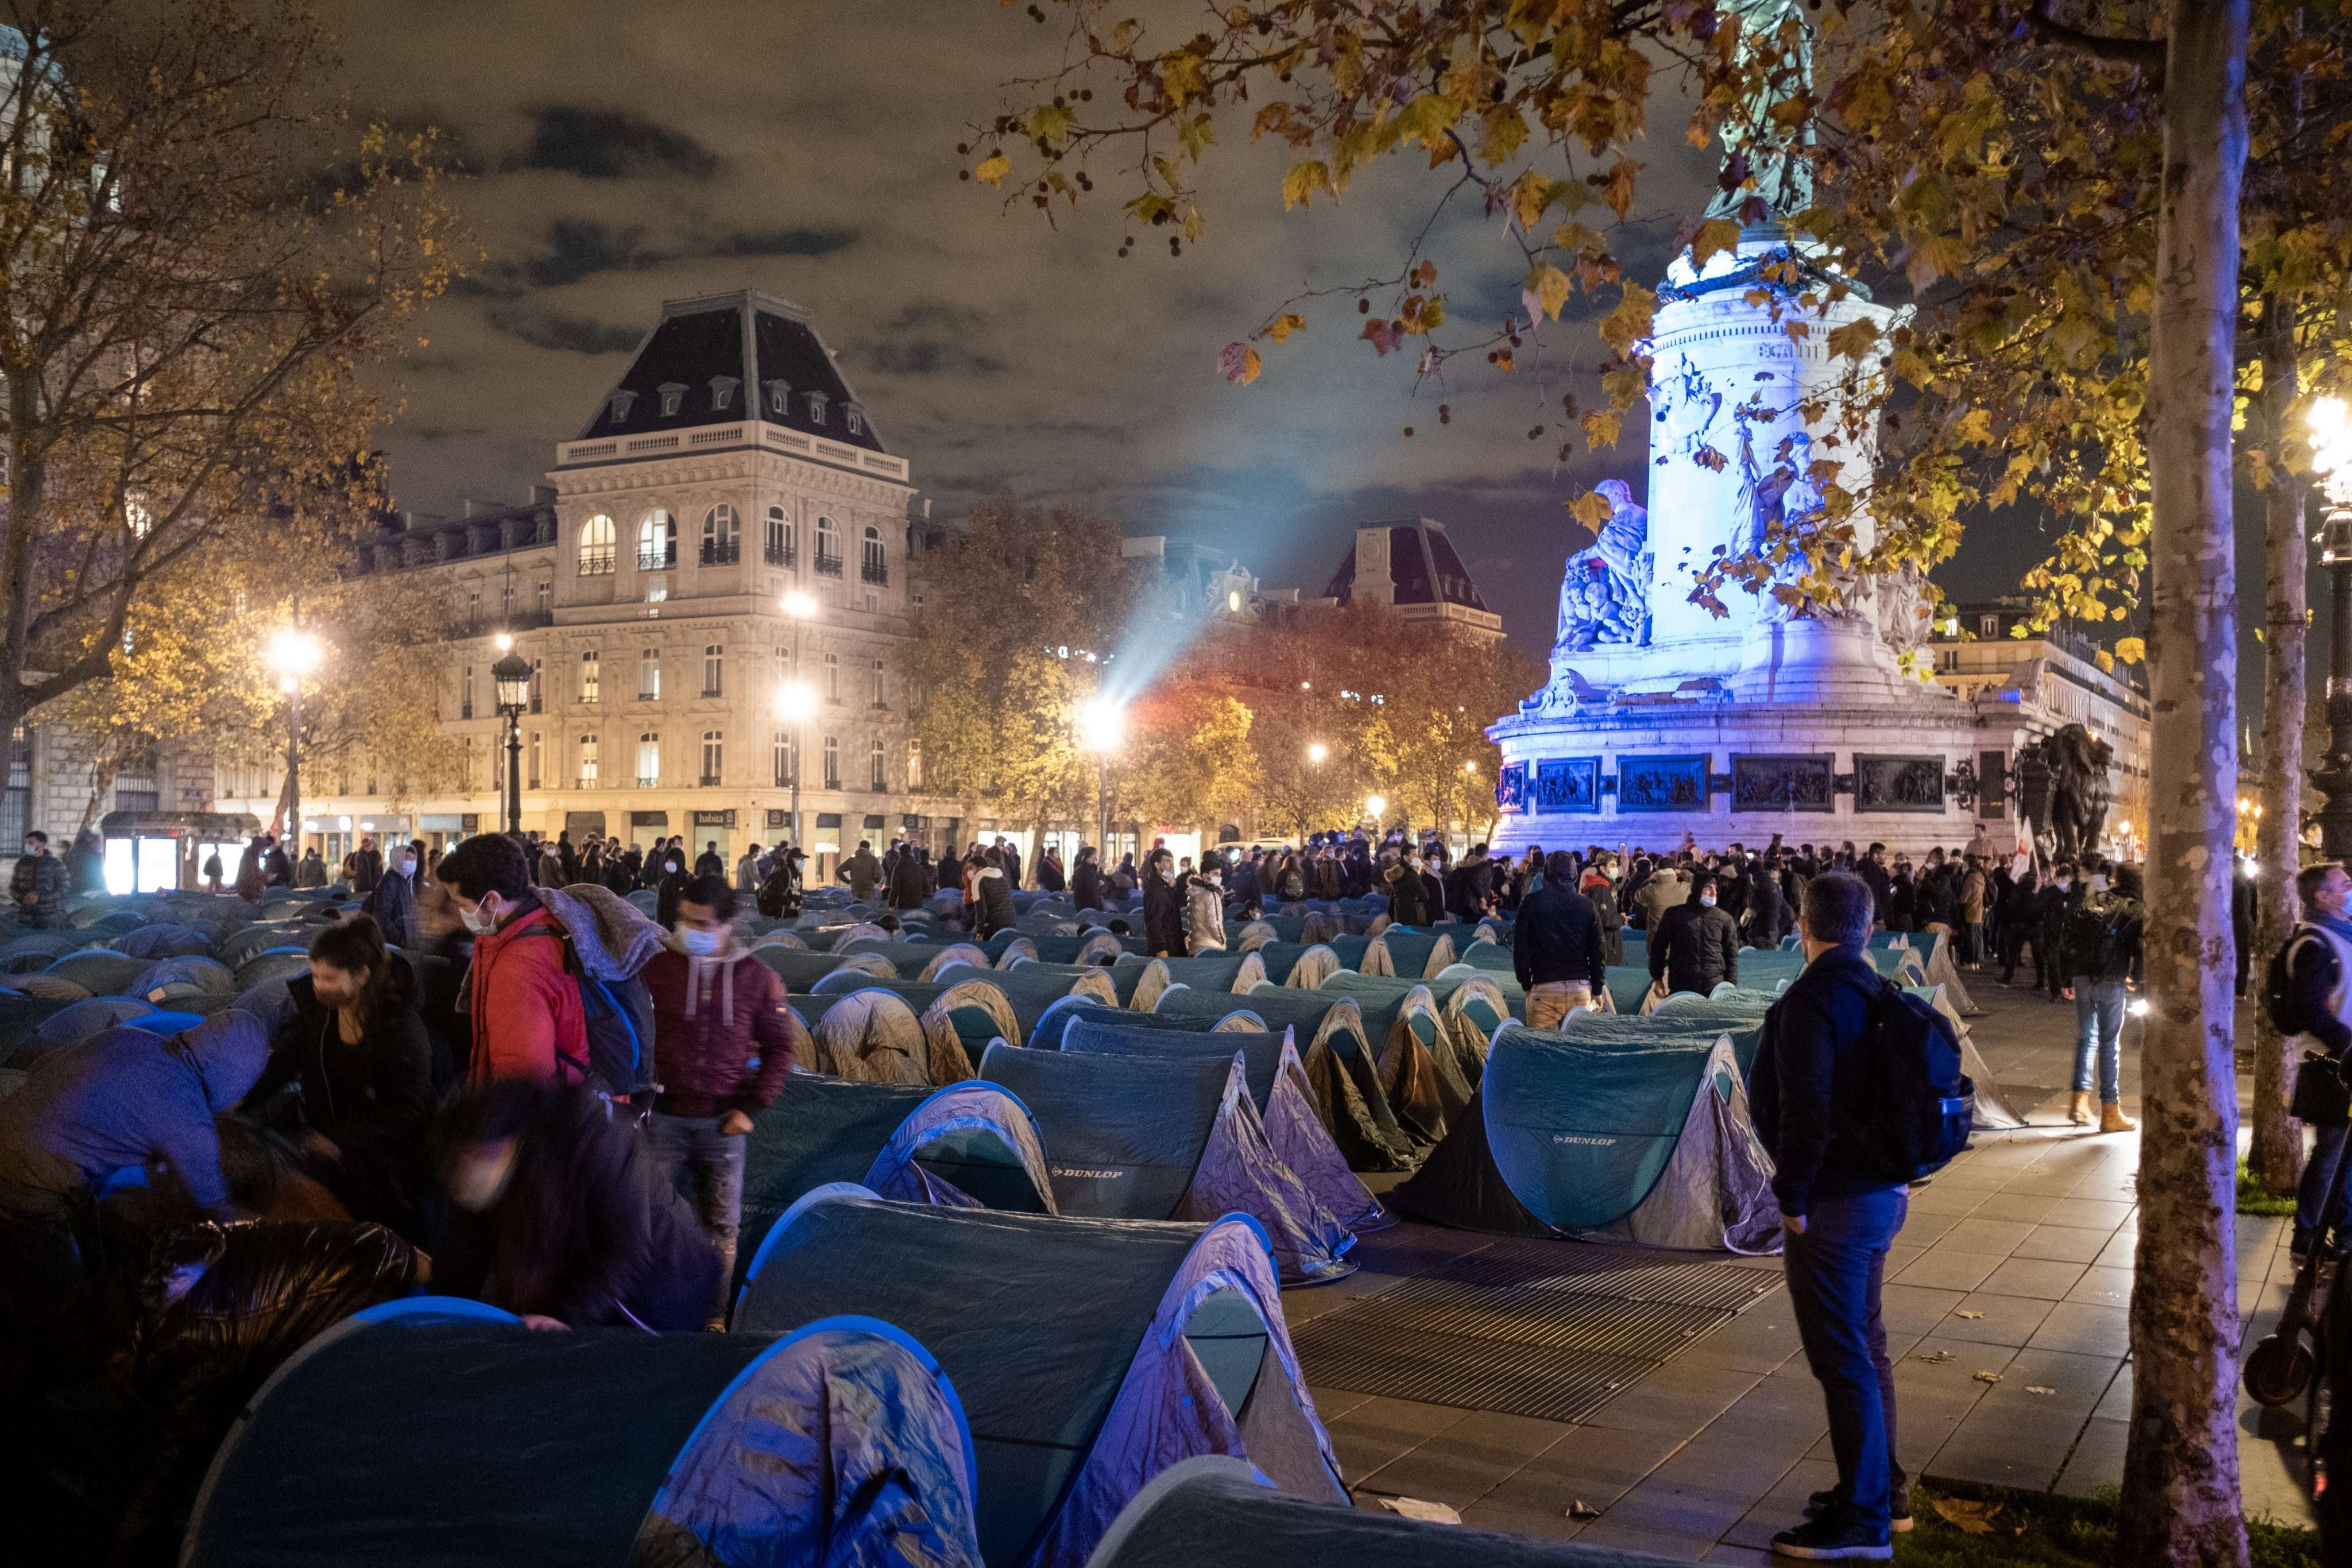 500 tents to shelter migrants were set up on Place de la République in Paris on November 23, 2020, before being violently dismantled by police forces